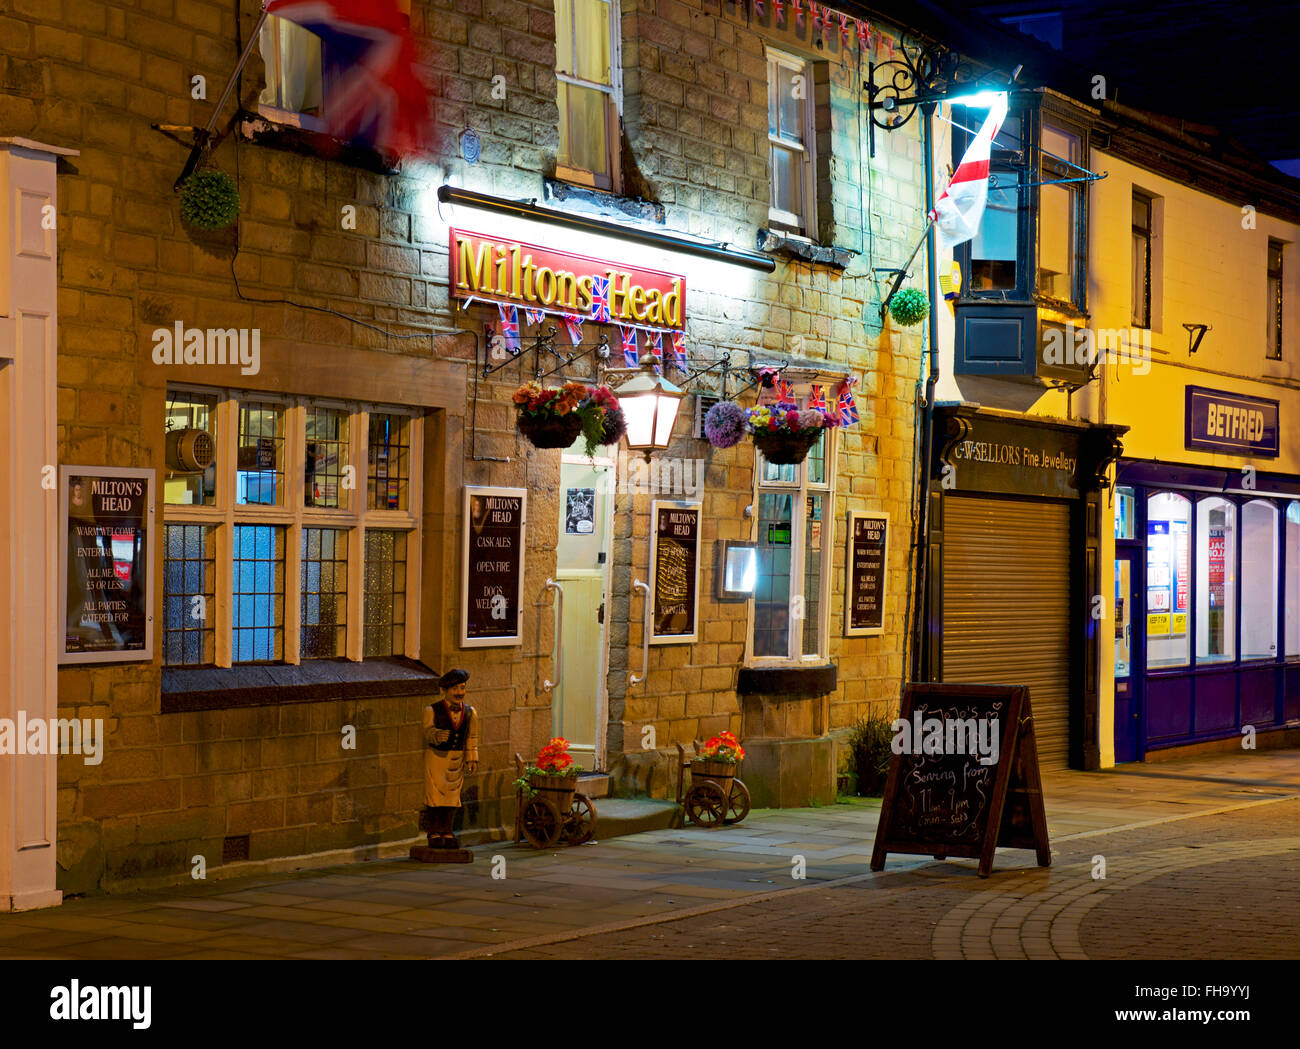 Miltons Head pub at night, Buxton, Derbyshire, England UK Stock Photo